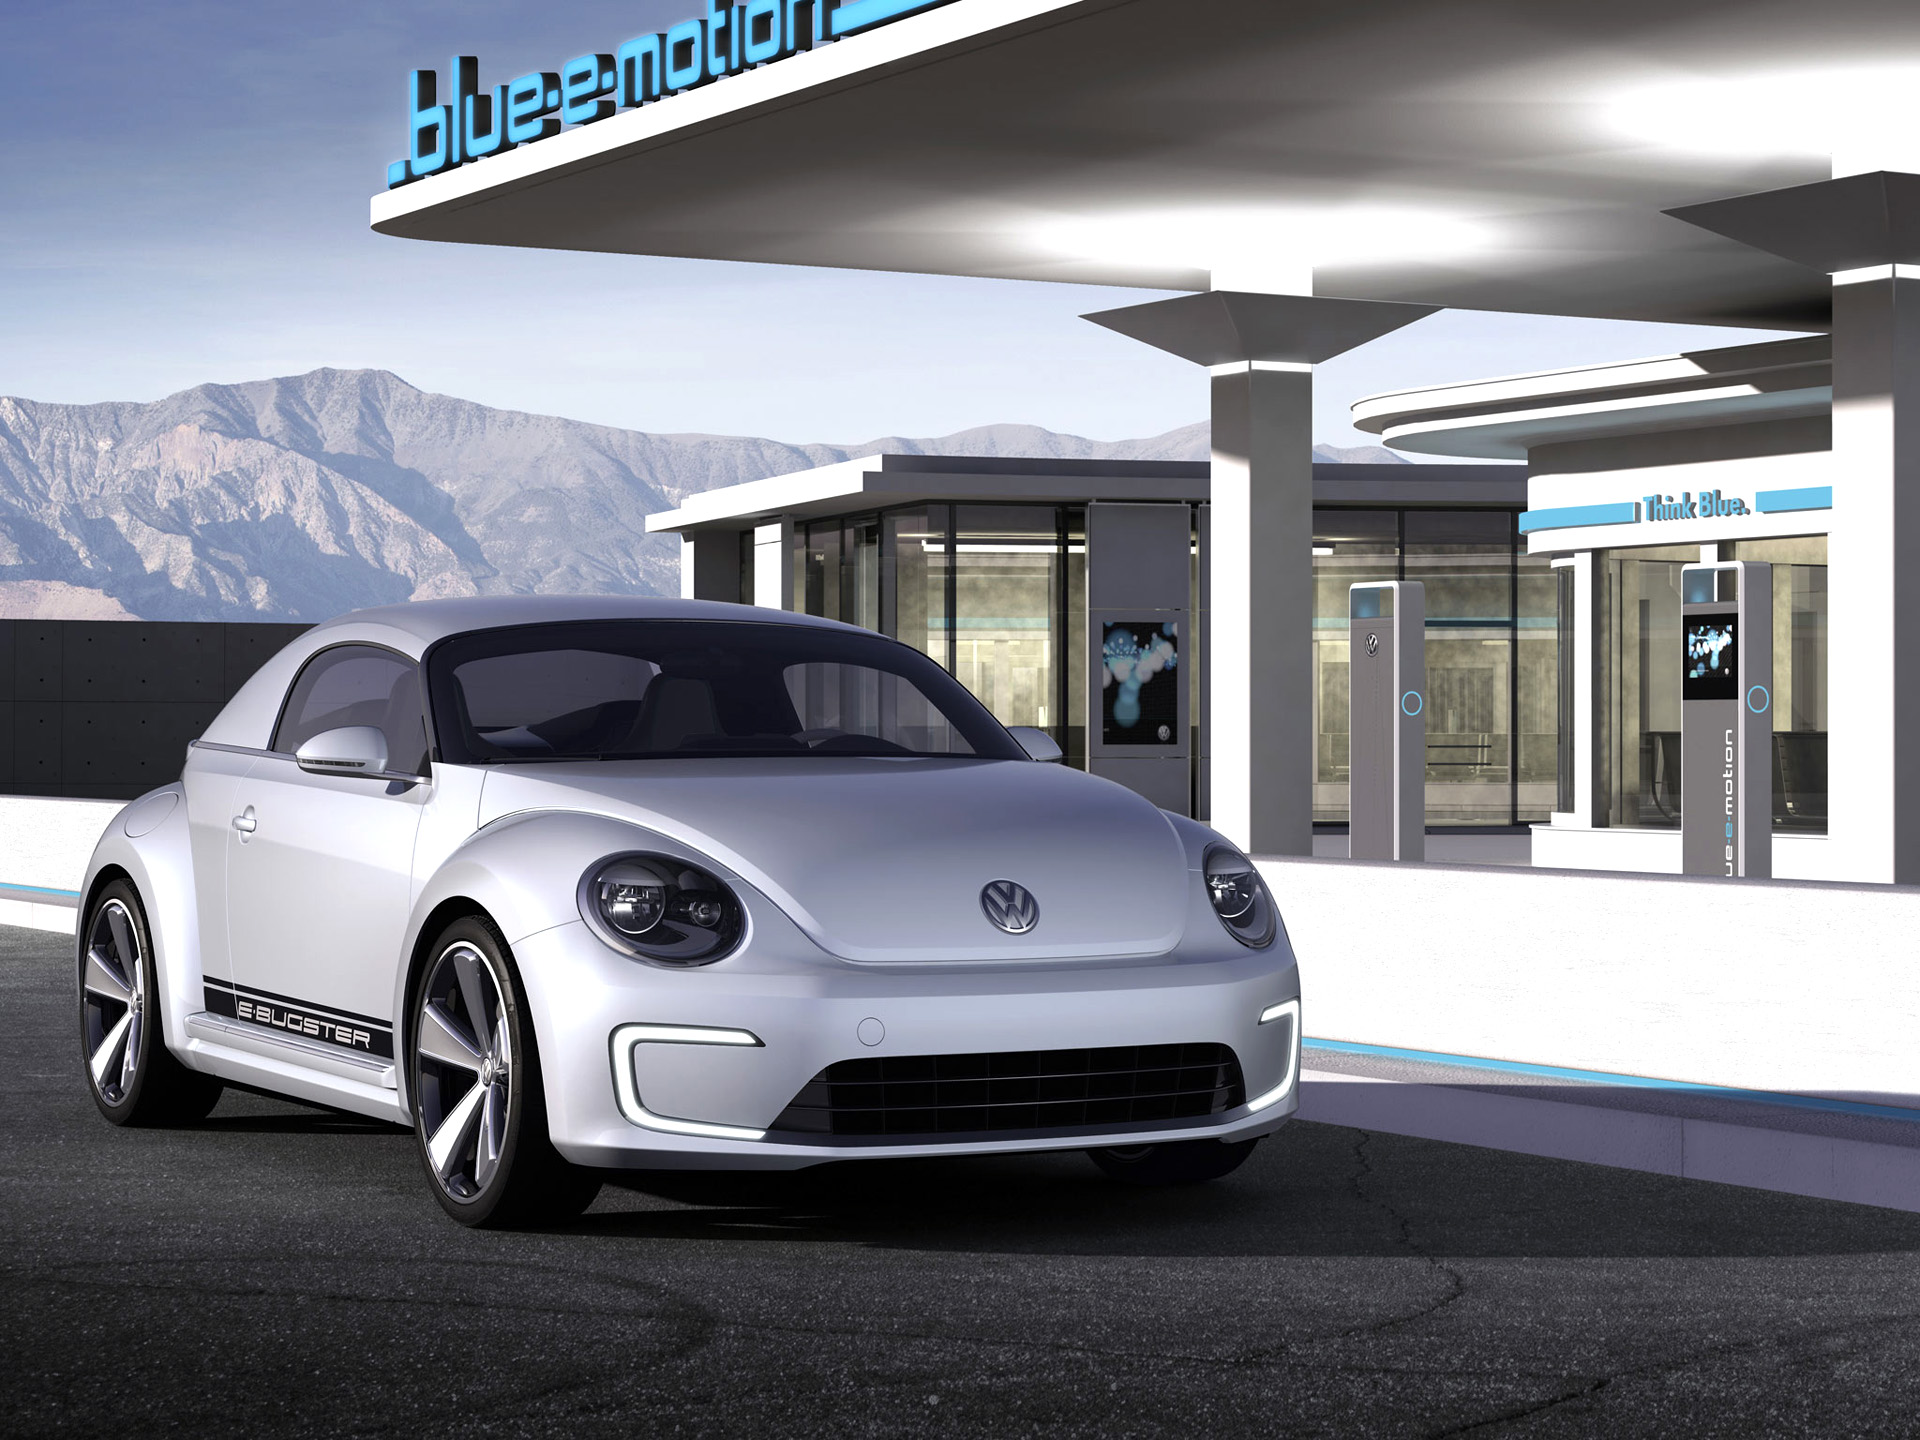  2012 Volkswagen E-Bugster Concept Wallpaper.